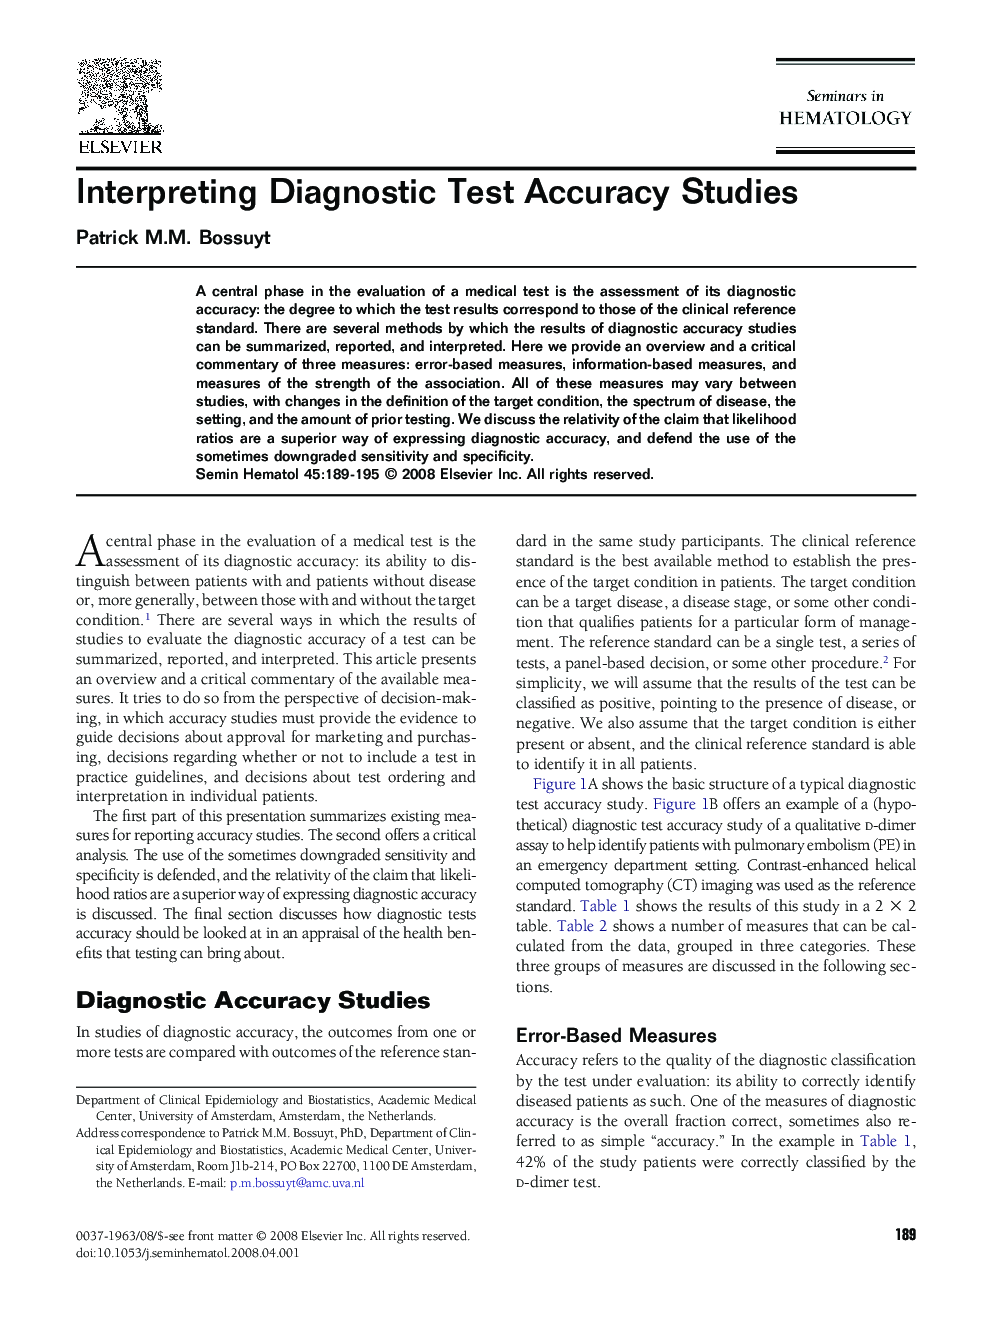 Interpreting Diagnostic Test Accuracy Studies